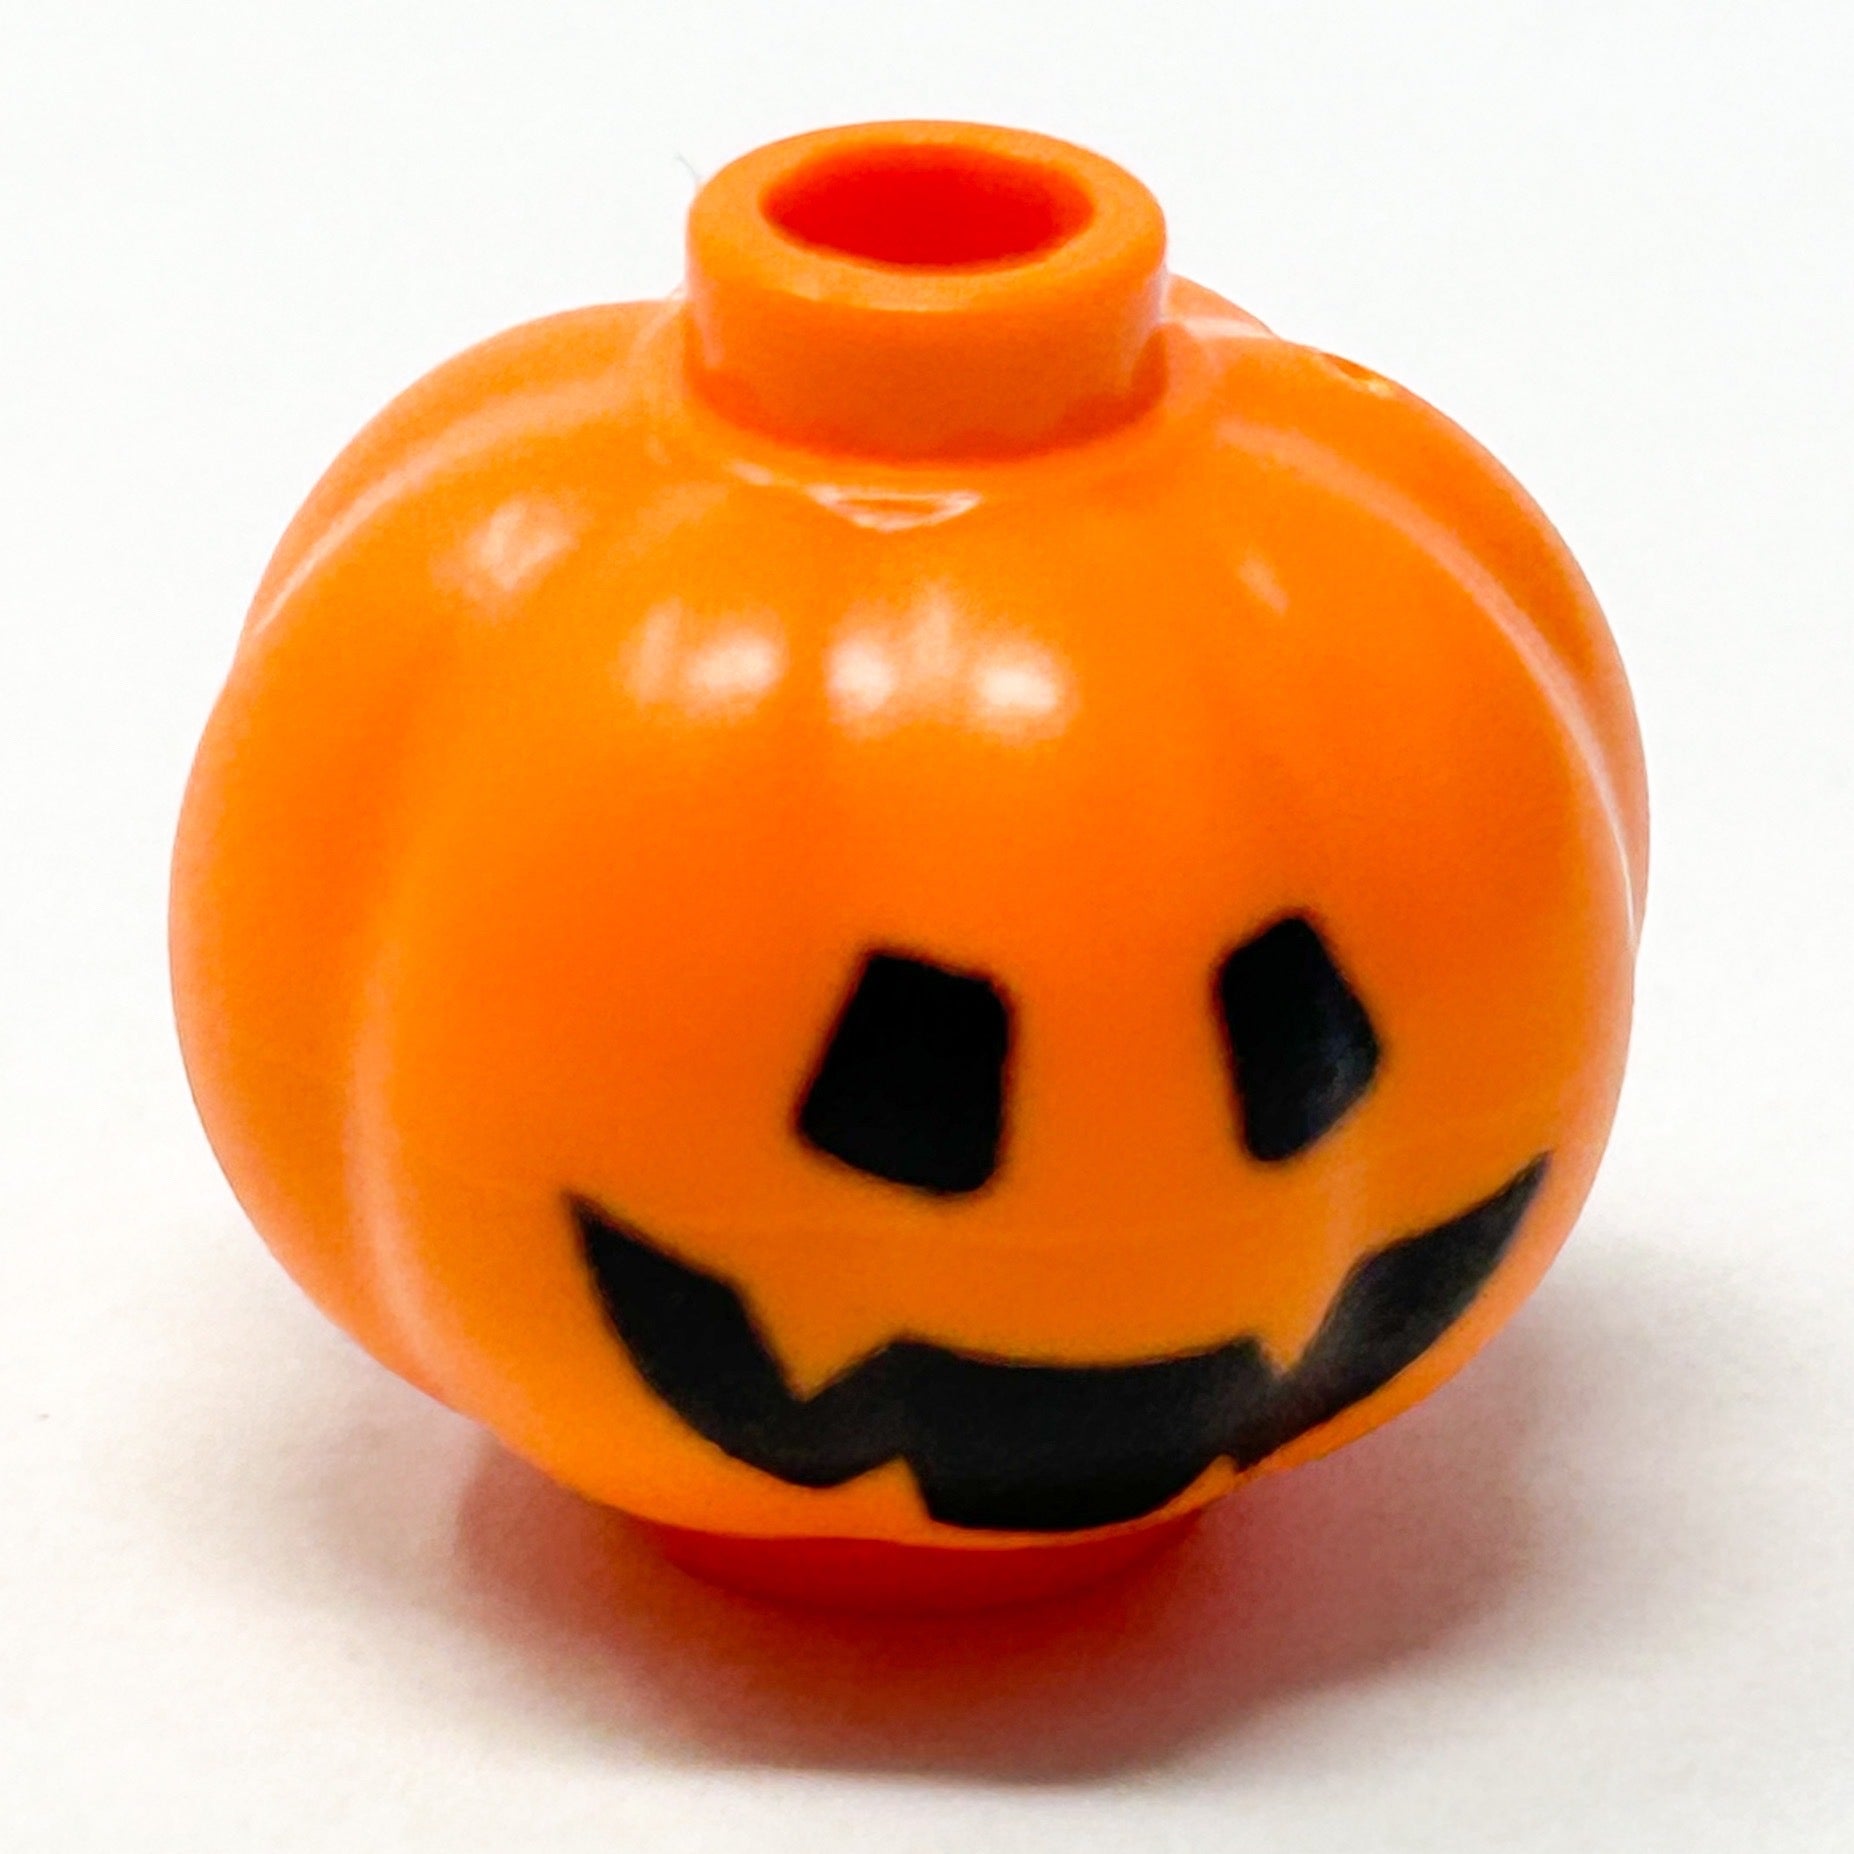 Custom Jack O' Lantern / Pumpkin Face #3 - B3 Customs made using LEGO part